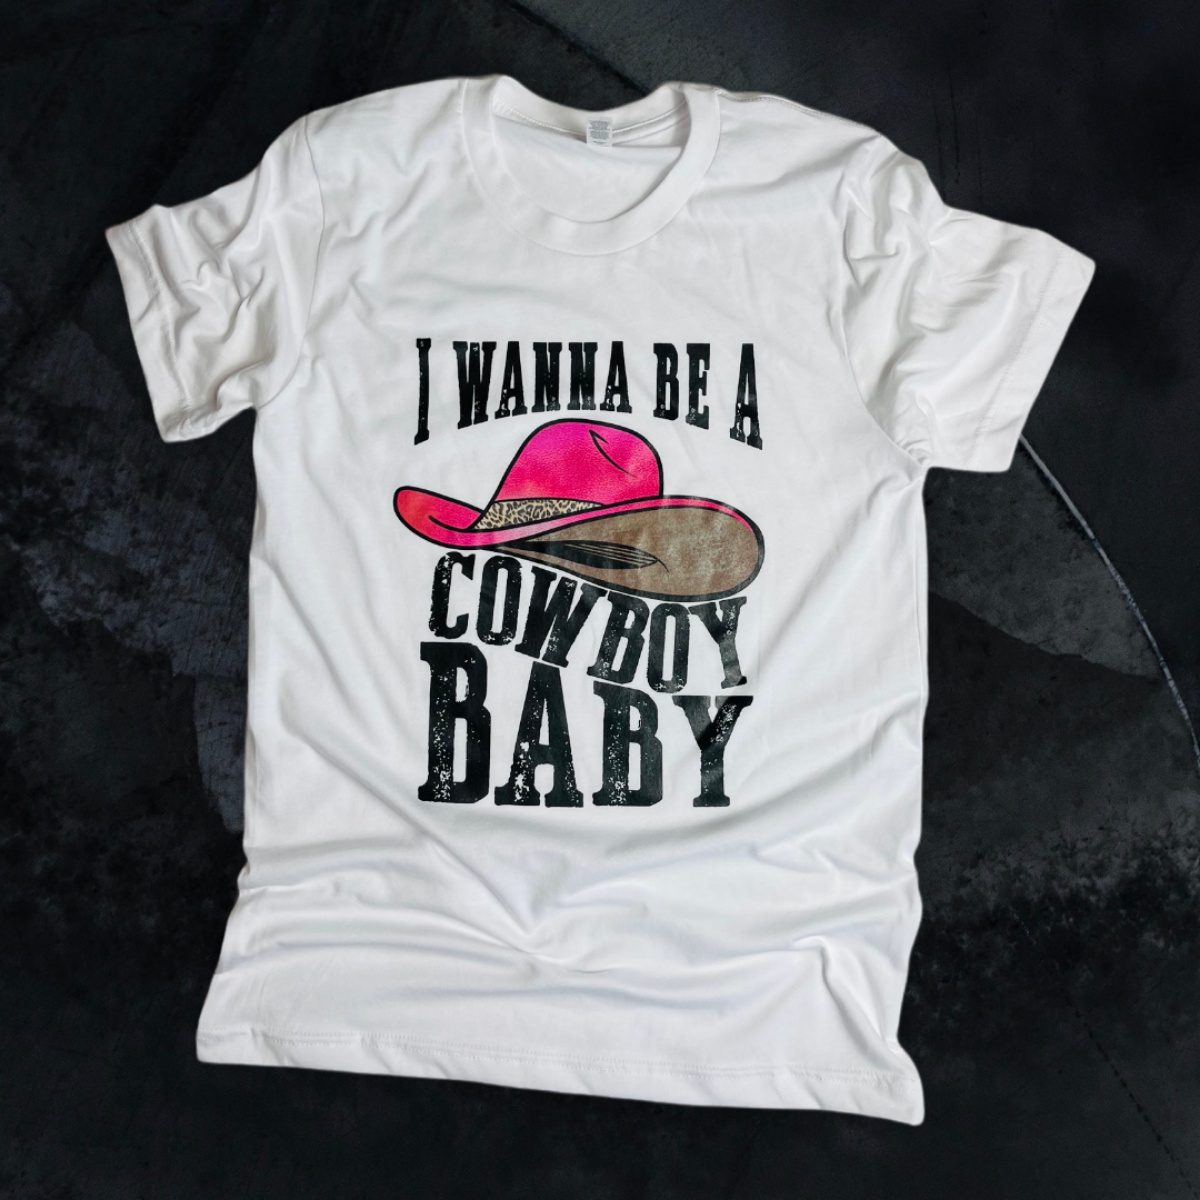 I Wanna Be a Cowboy Baby - Pink